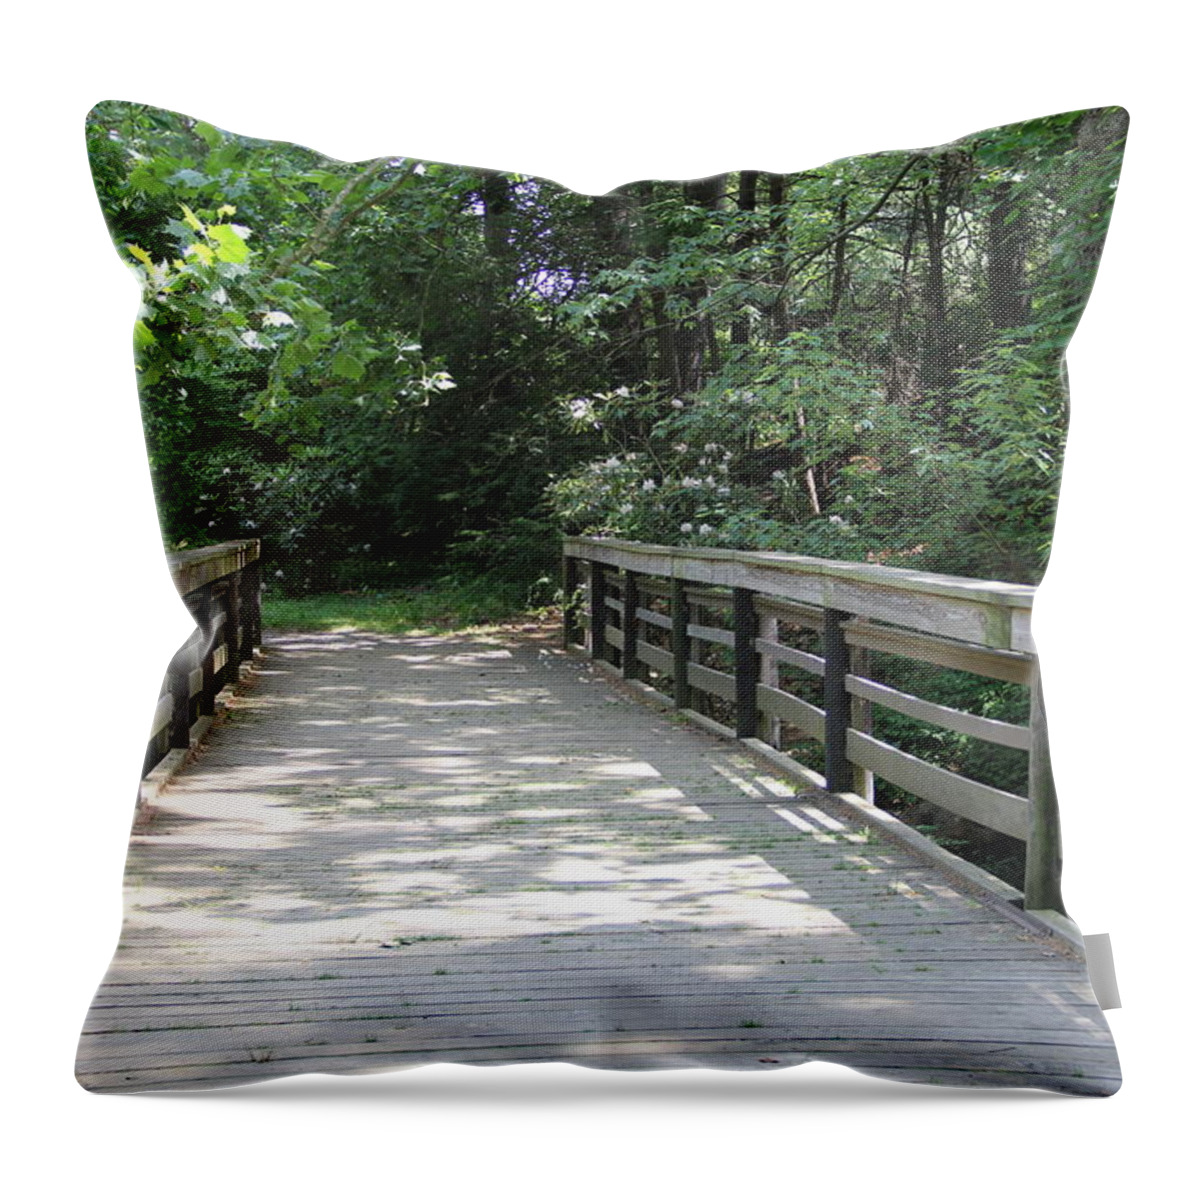 Bridge Throw Pillow featuring the photograph Straight Bridge by Allen Nice-Webb